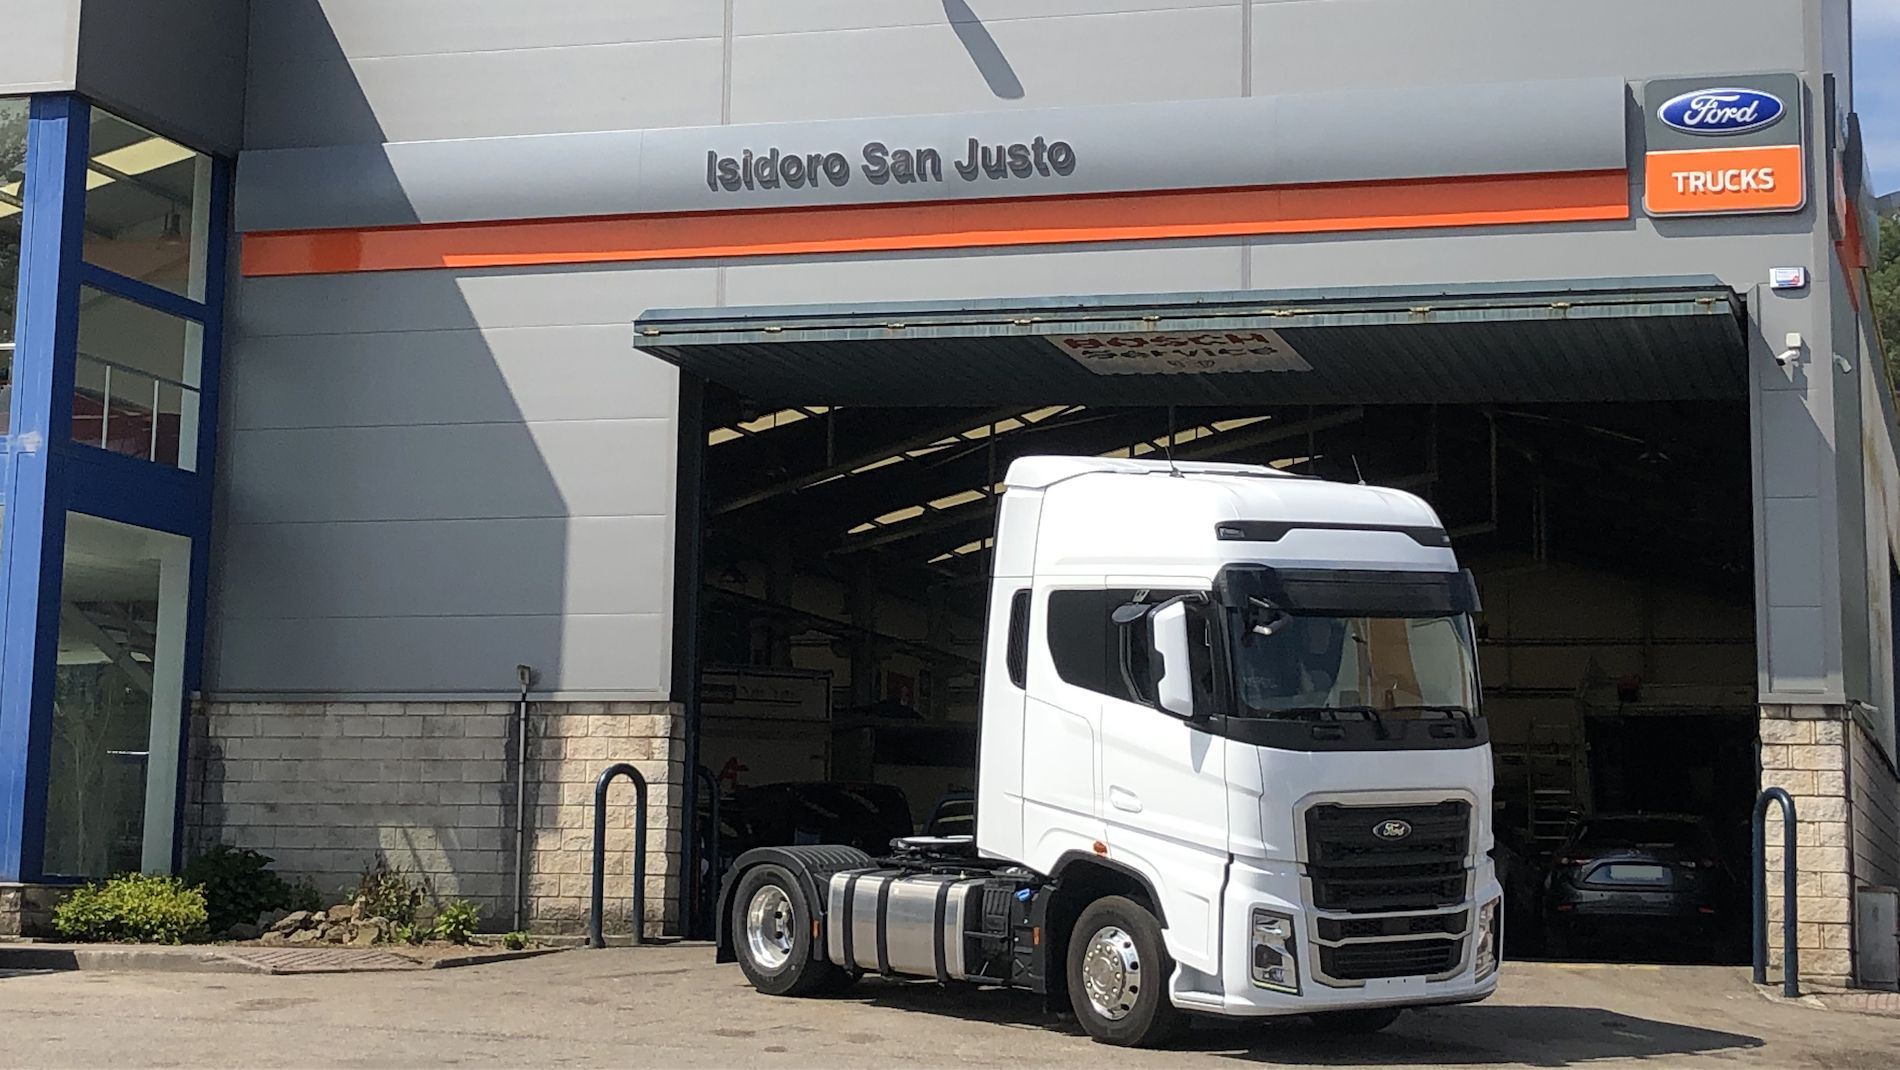 camion Ford Trucks postventa Isidoro San Justo Cantabria